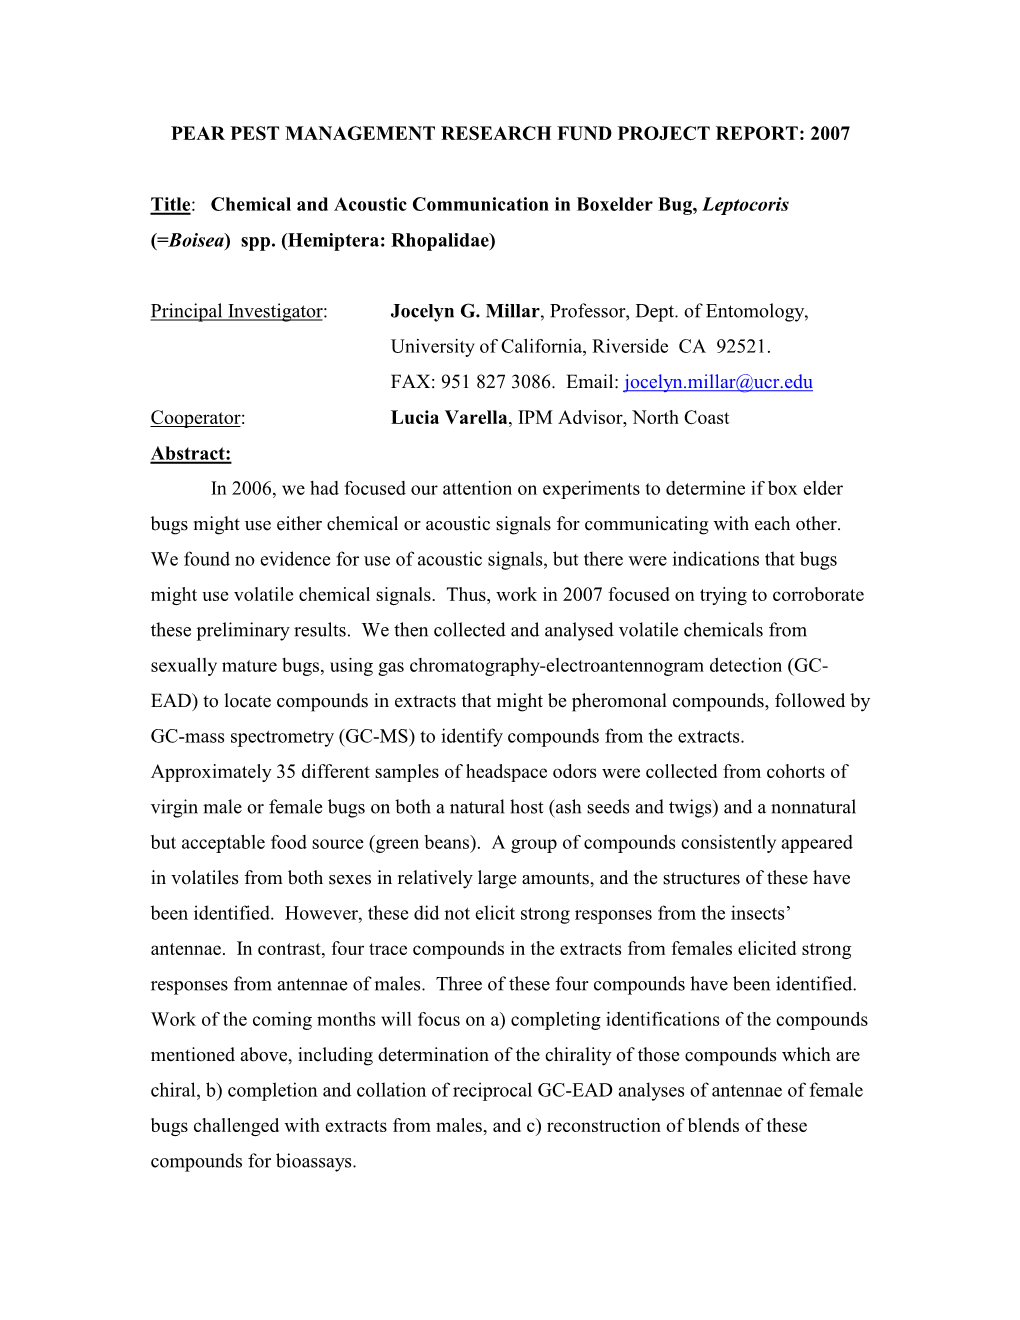 Chemical and Acoustic Communication in Boxelder Bug, Leptocoris (=Boisea) Spp